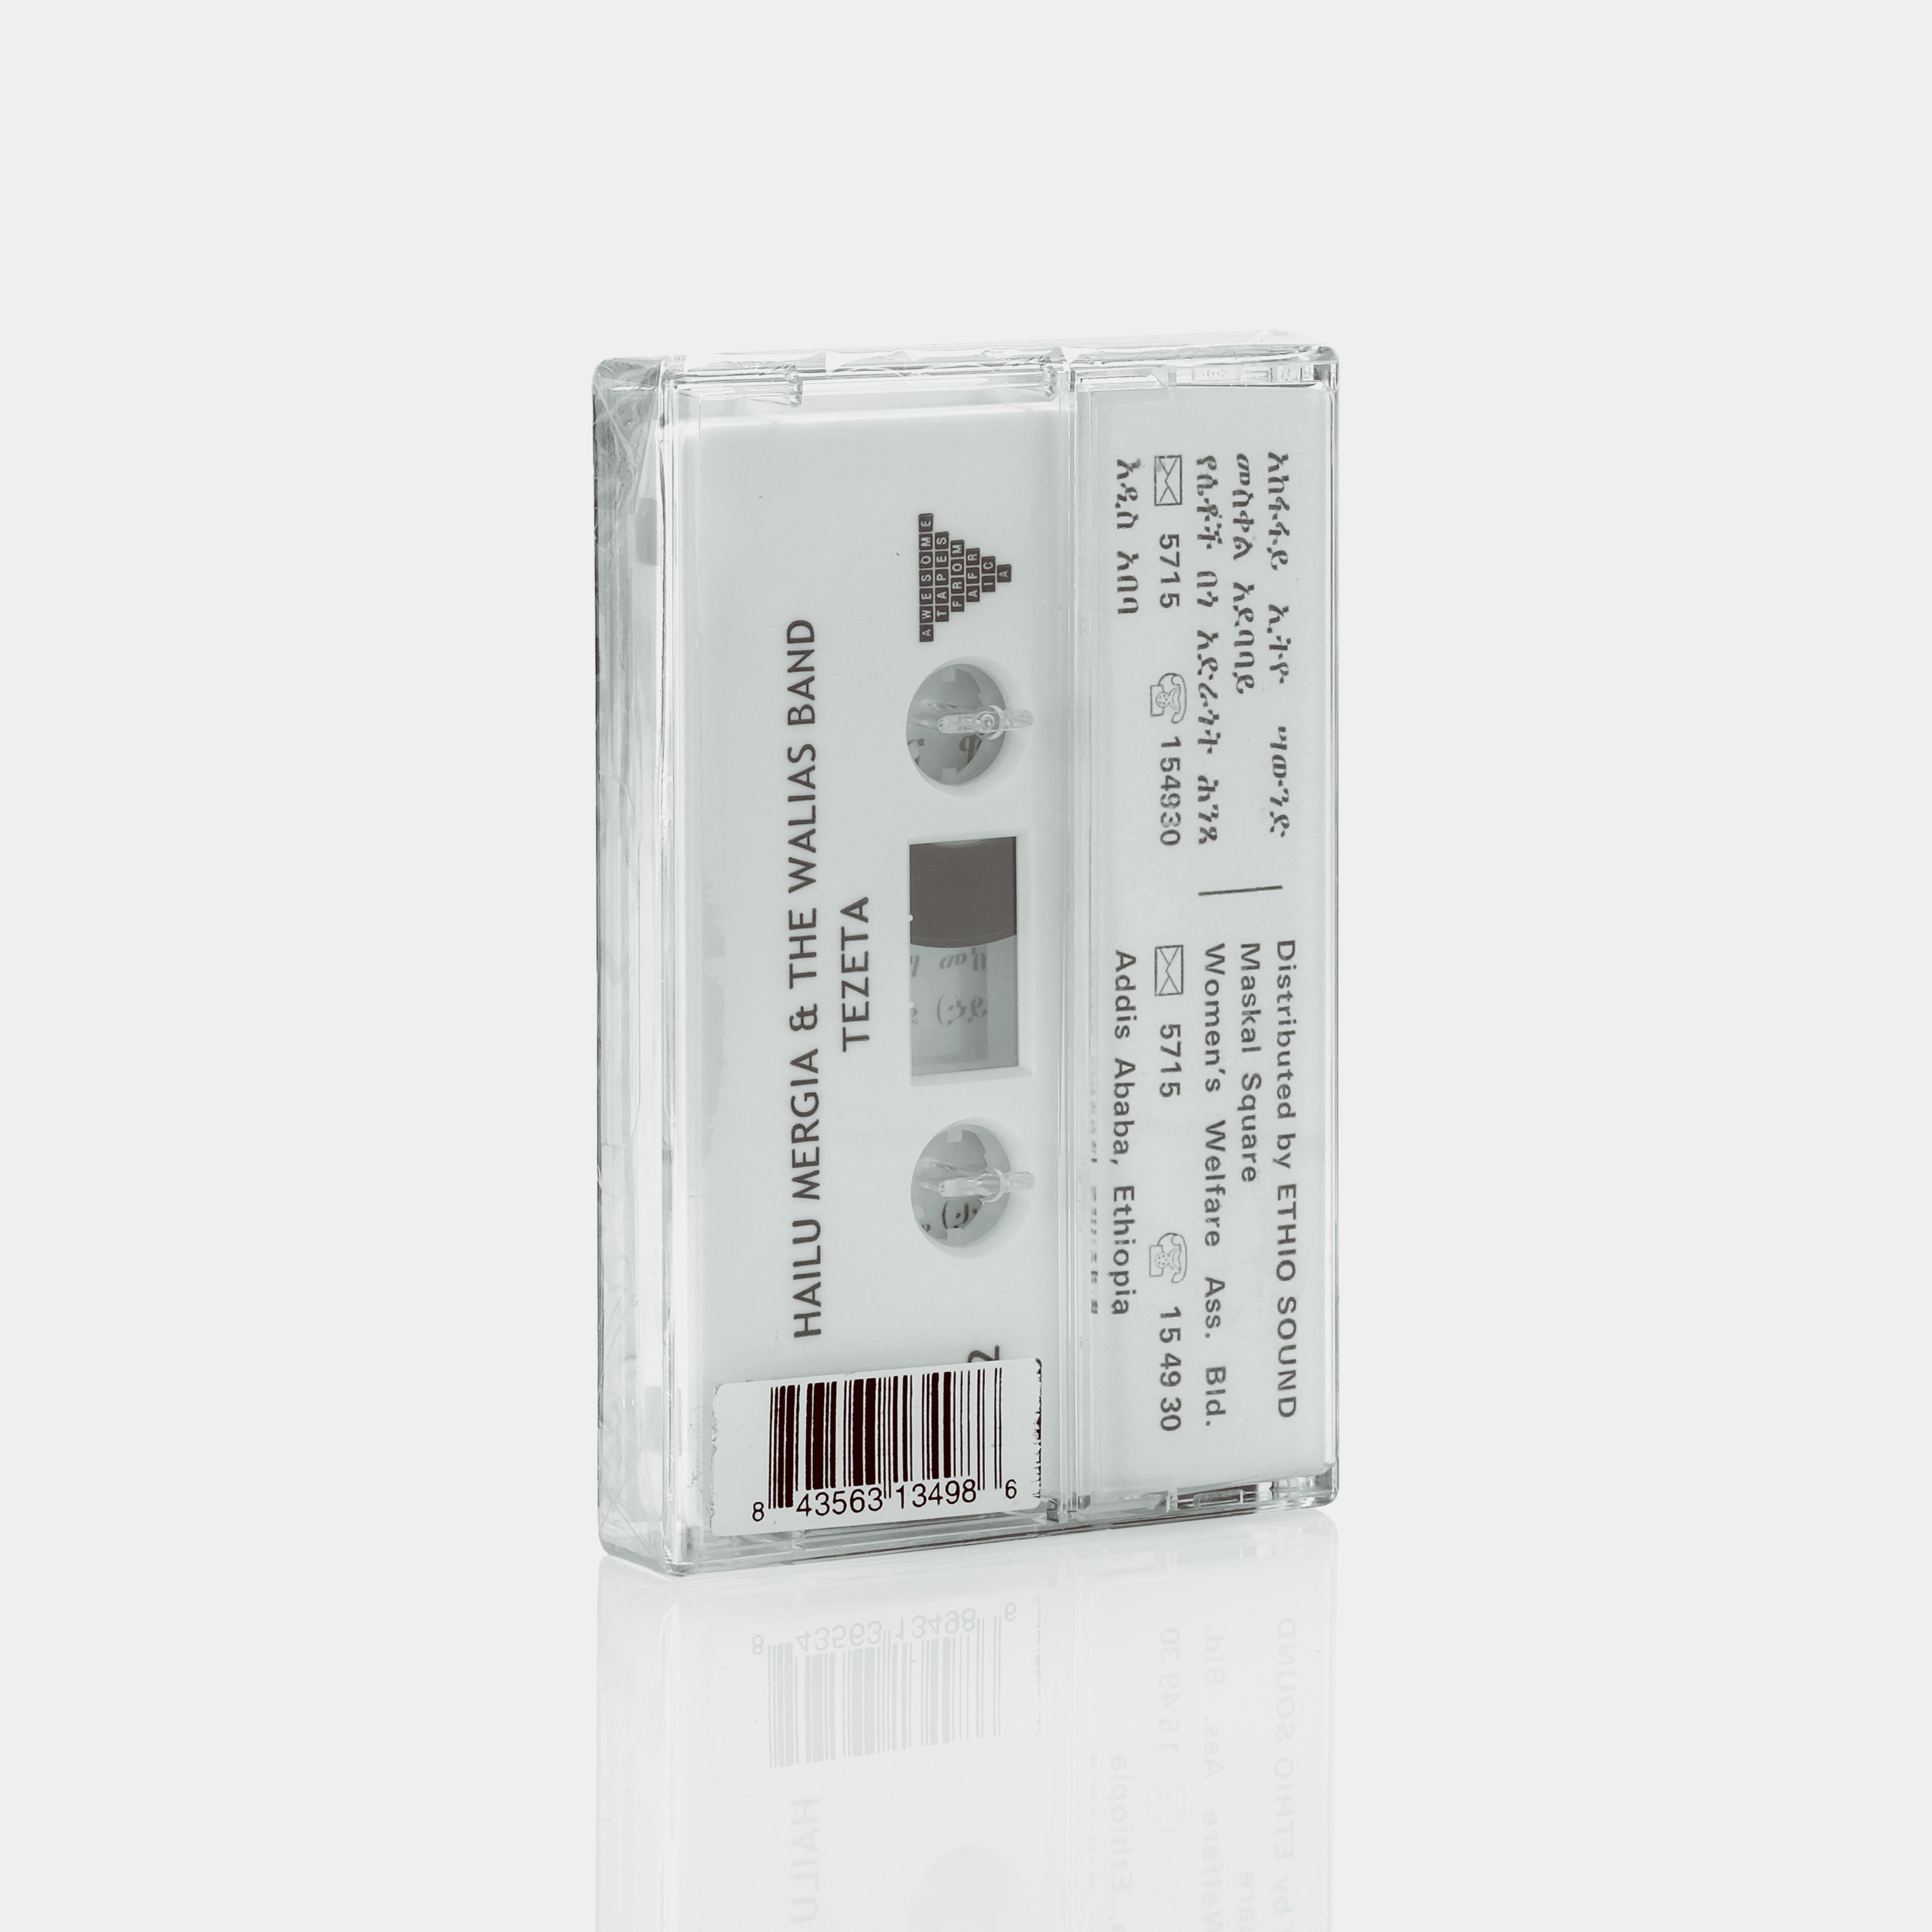 Hailu Mergia & The Walias Band - Tezeta Cassette Tape